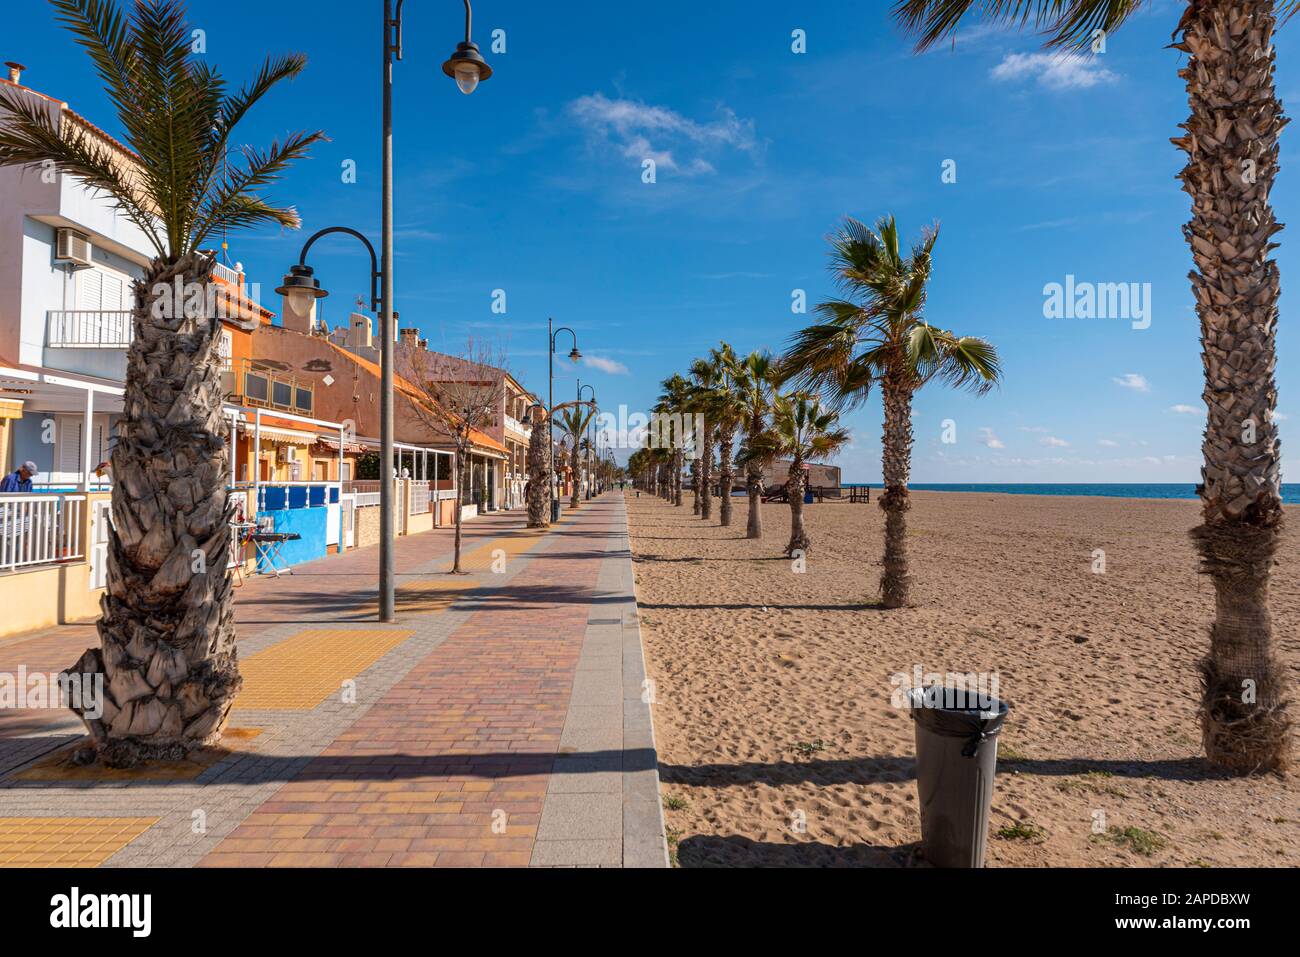 Bolnuevo beach, Region de Murcia, Costa Calida, Spain on the Mediterranean Sea. Avenue of palm trees on promenade with seafront properties Stock Photo